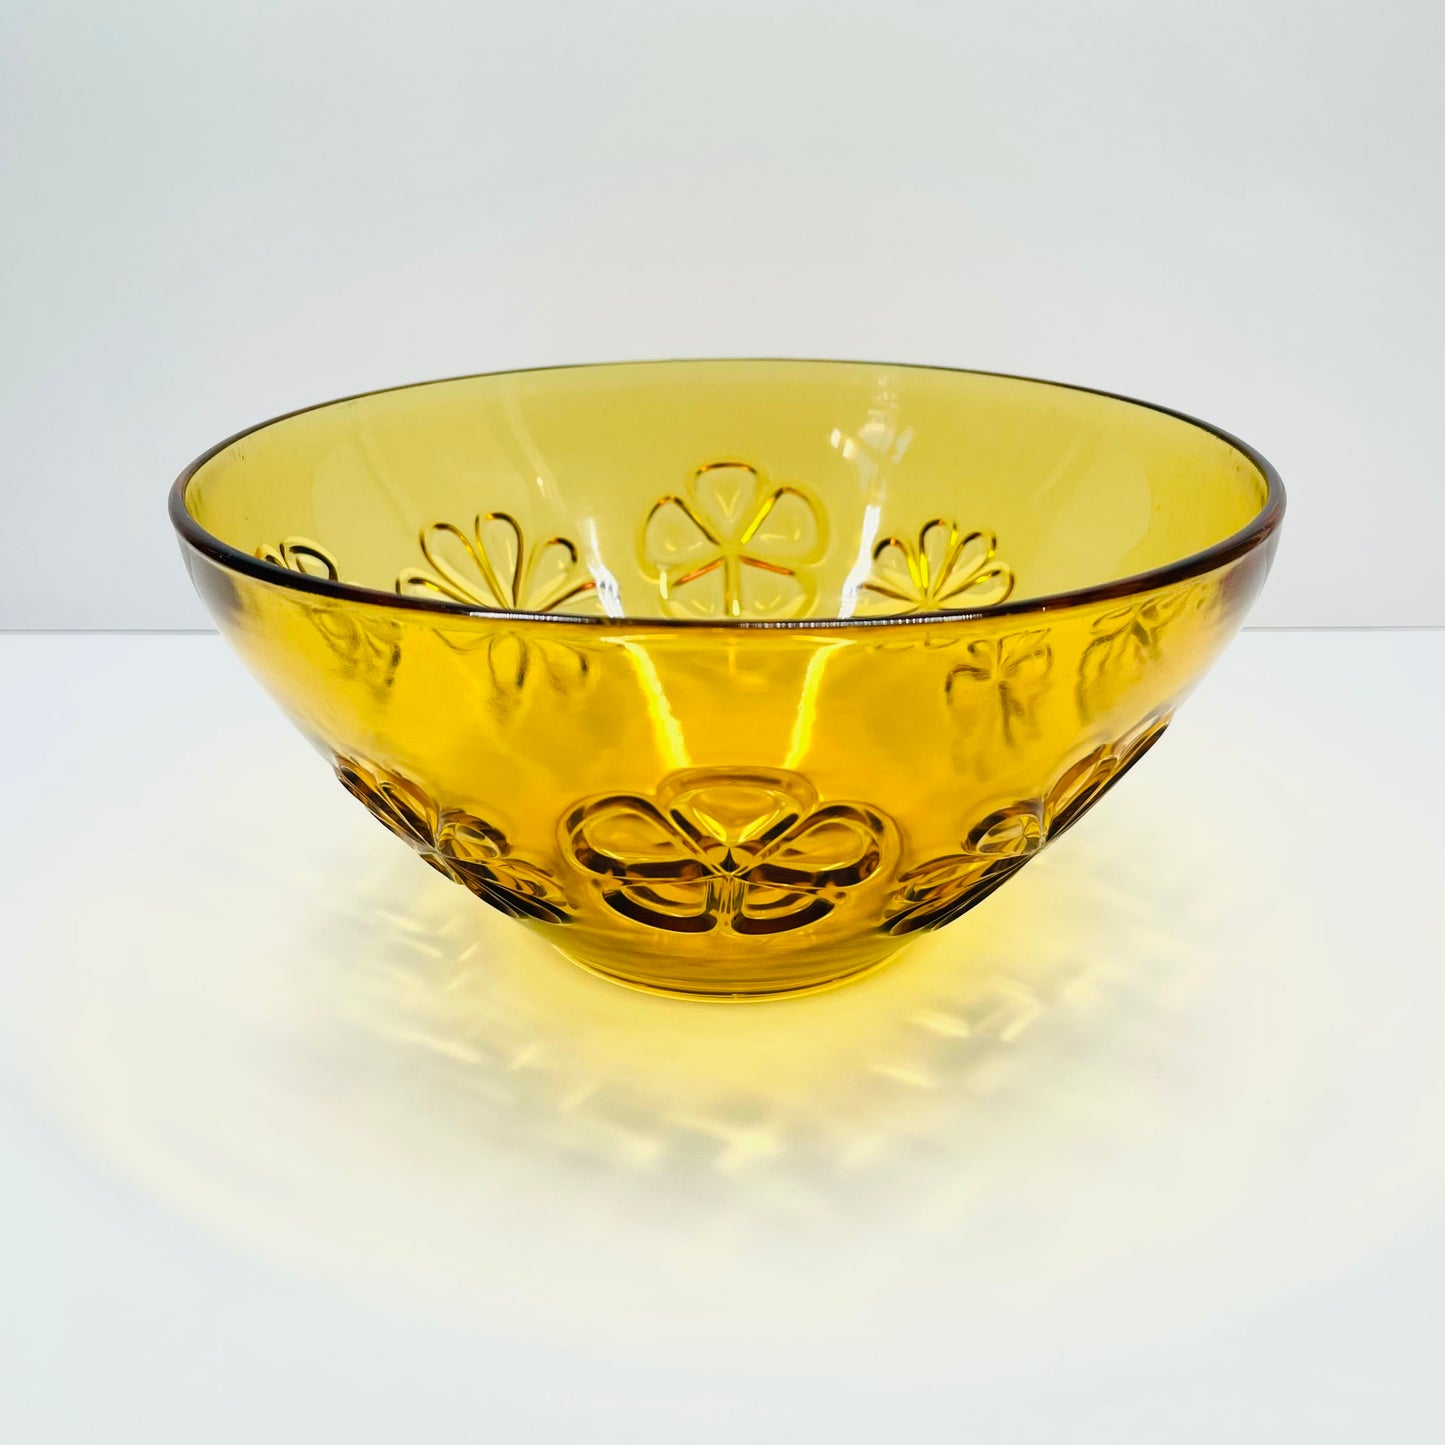 1970s daisy print amber glass salad/fruit bowl